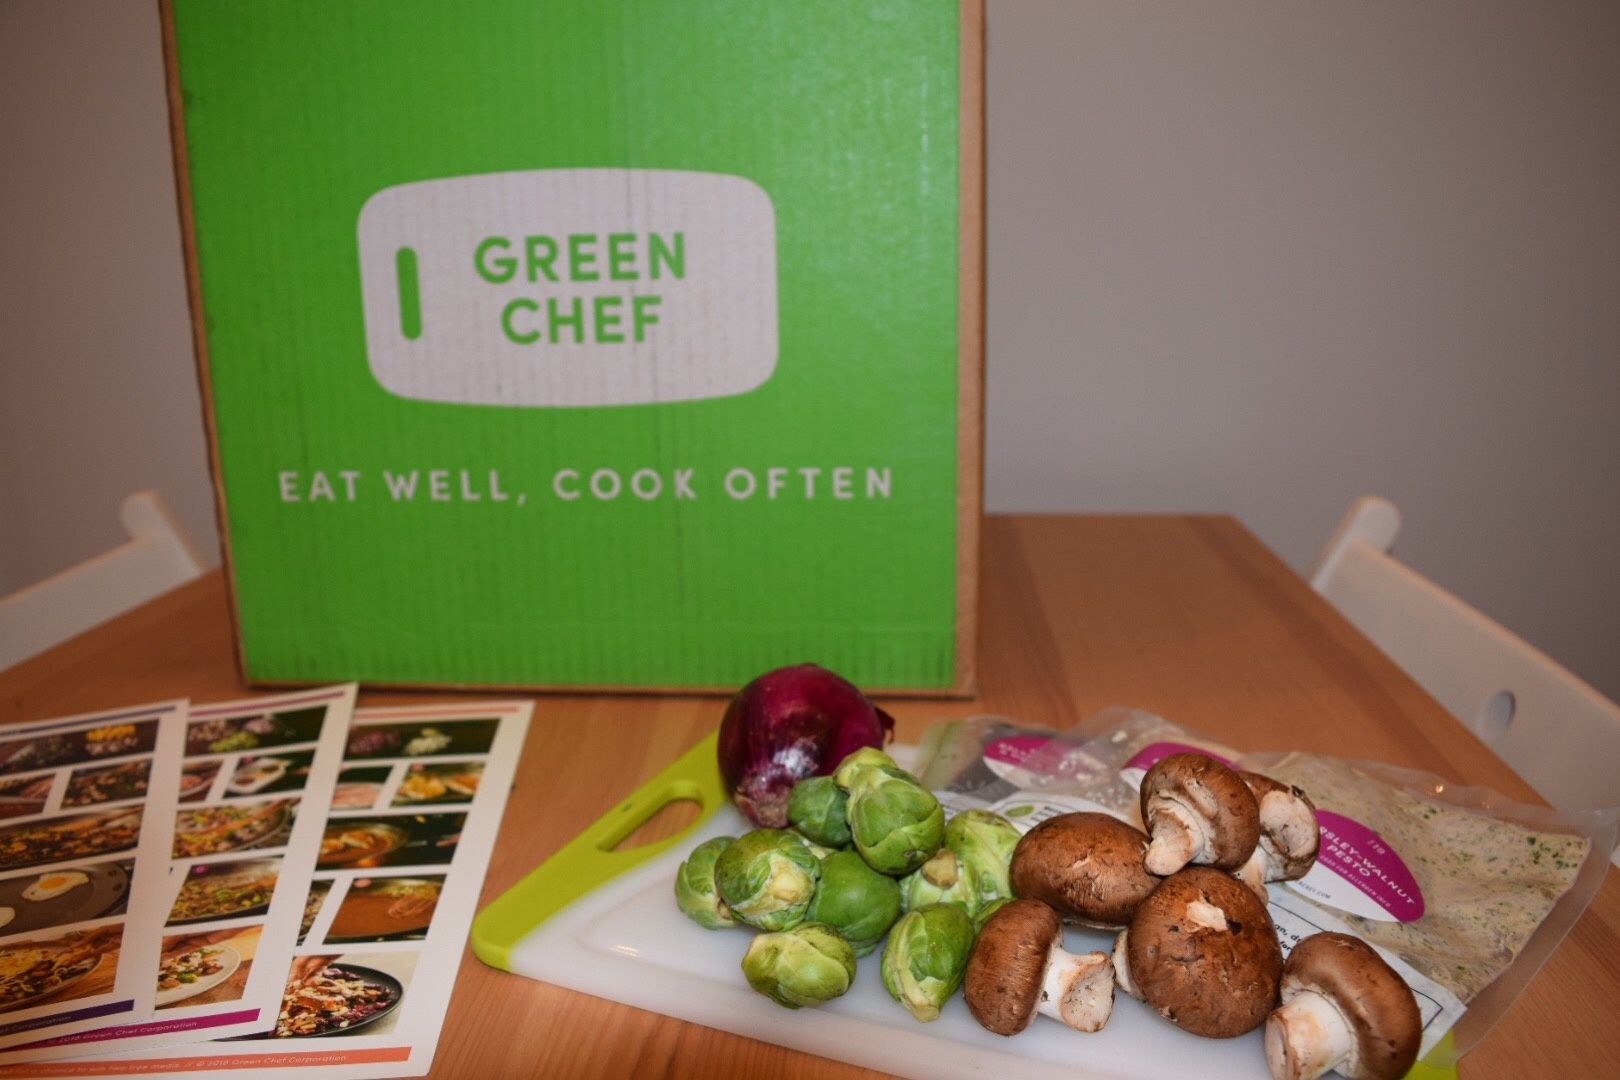 A Green Chef box next to fresh veggies